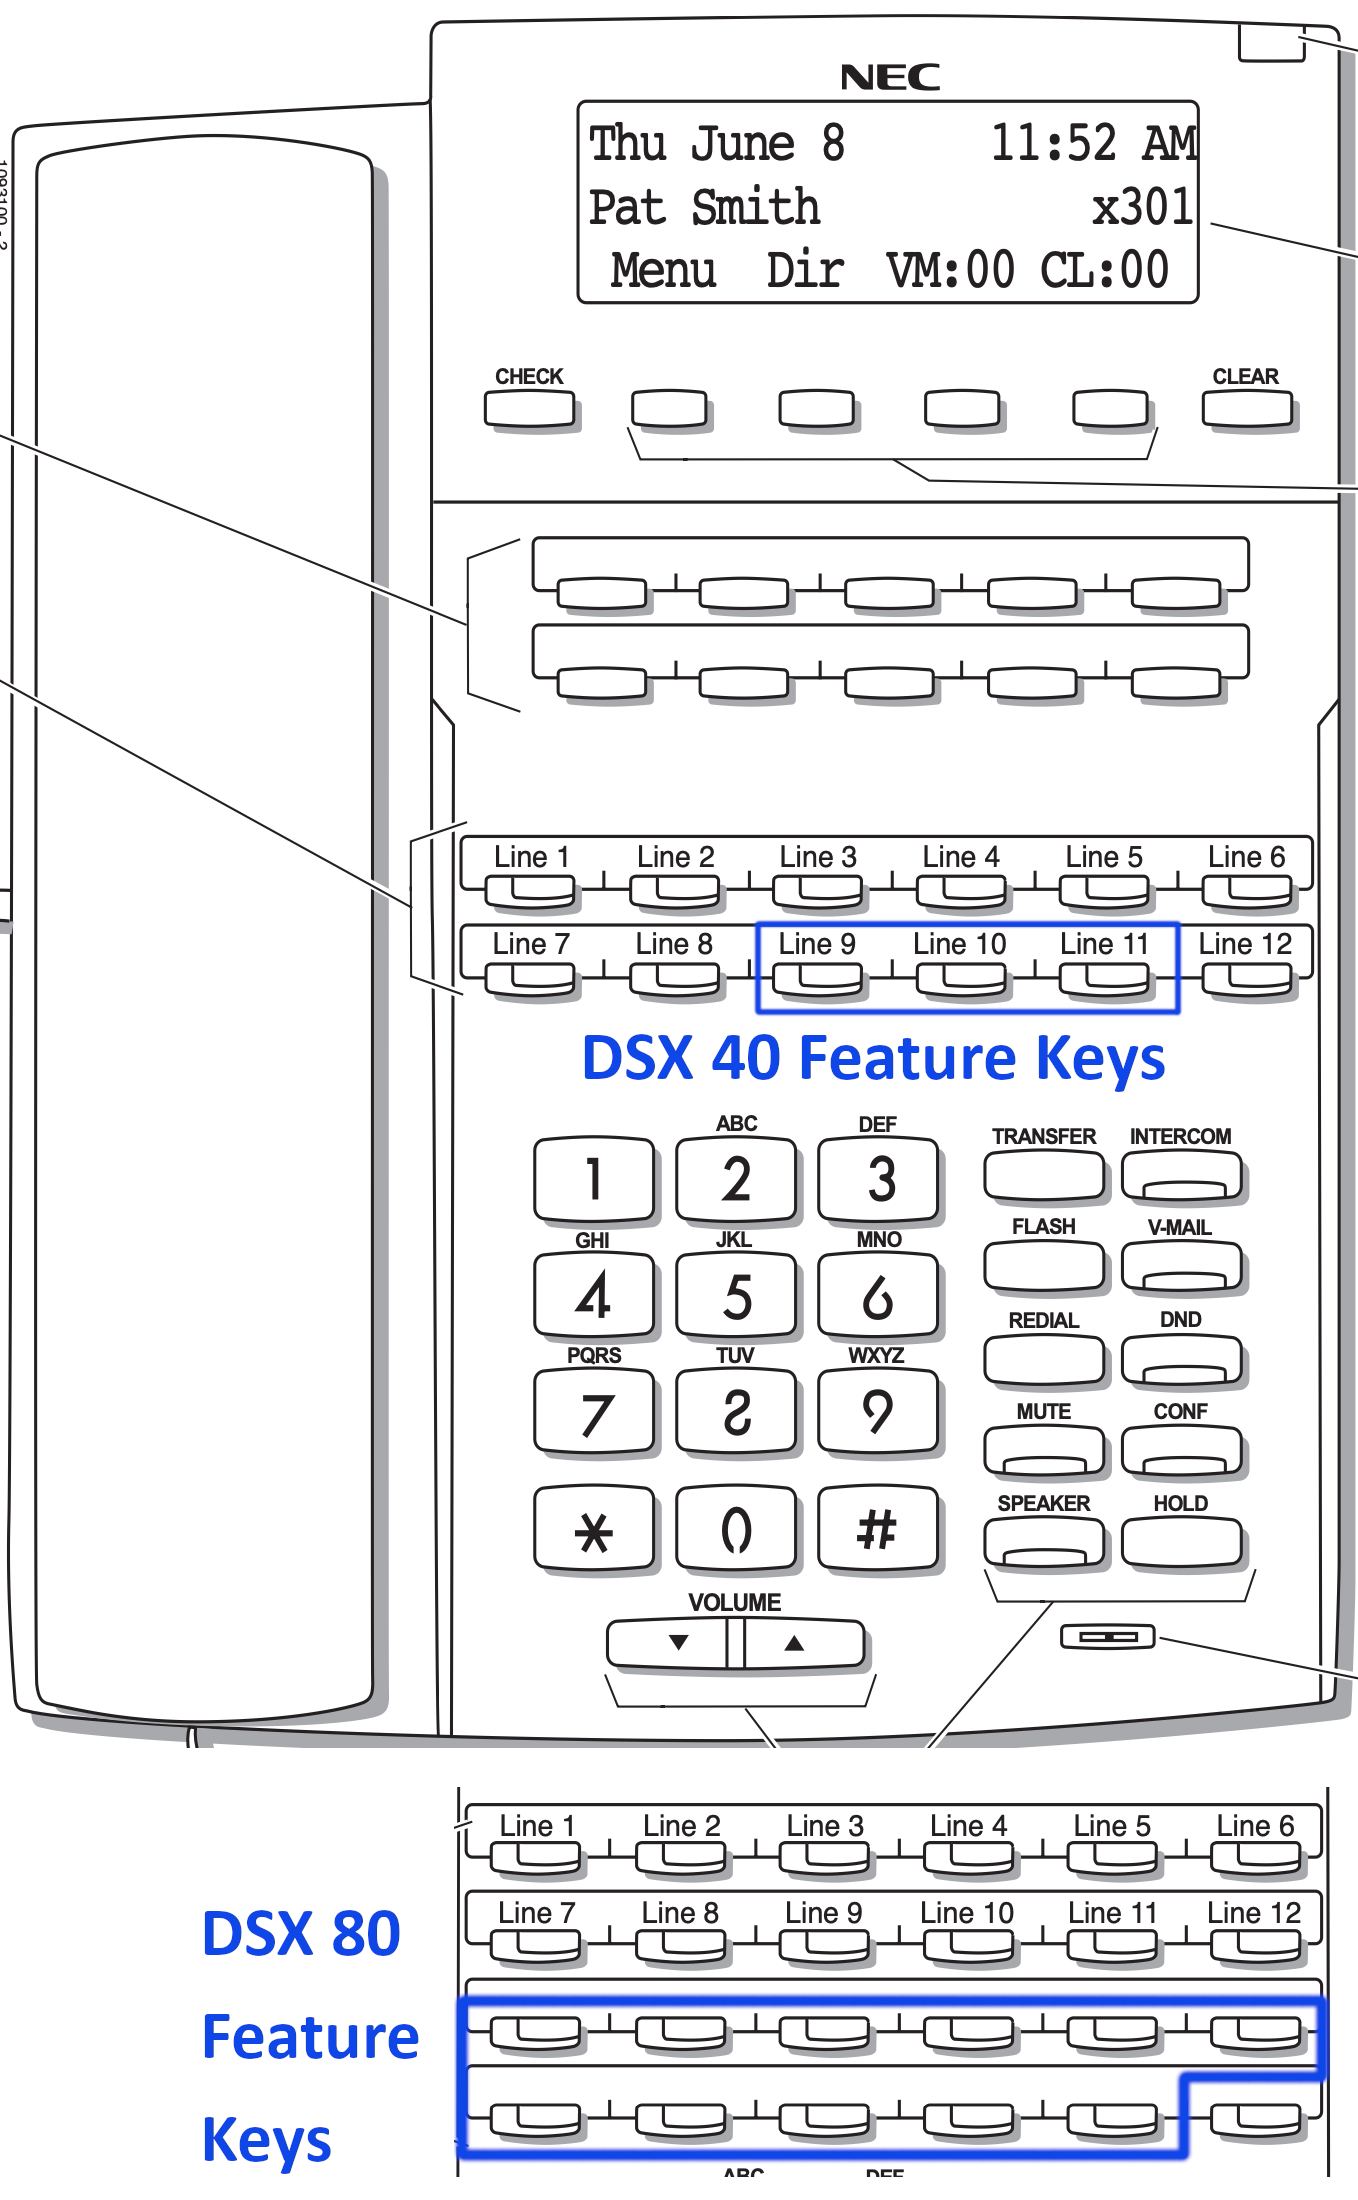 NEC DSX Phone keypad layout